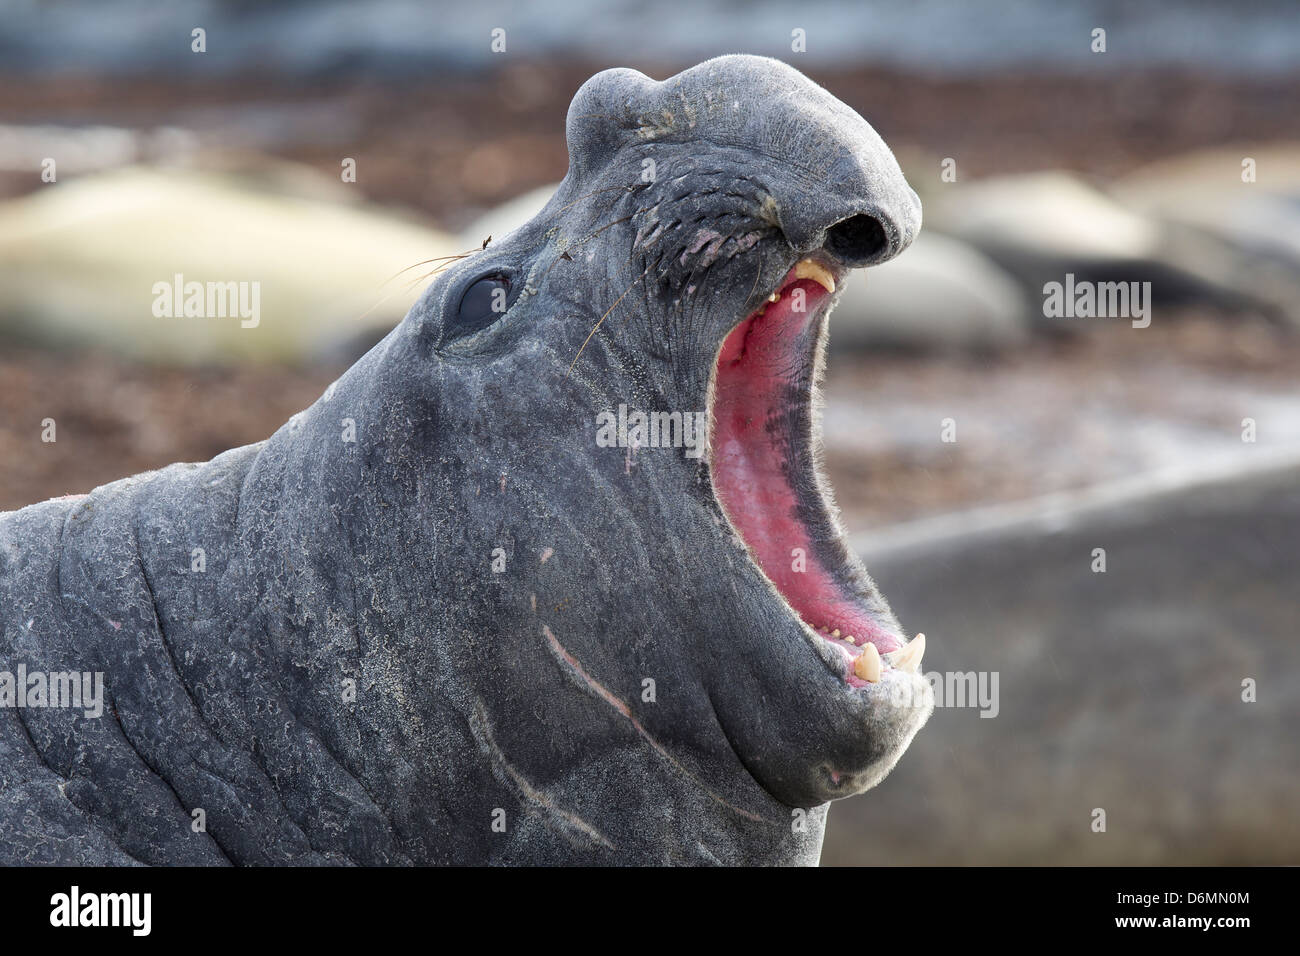 Southern Elephant Seal, Mirounga leonina, Südlicher See-Elefant, Sea Lion Island, Falkland Islands, young bull roaring Stock Photo